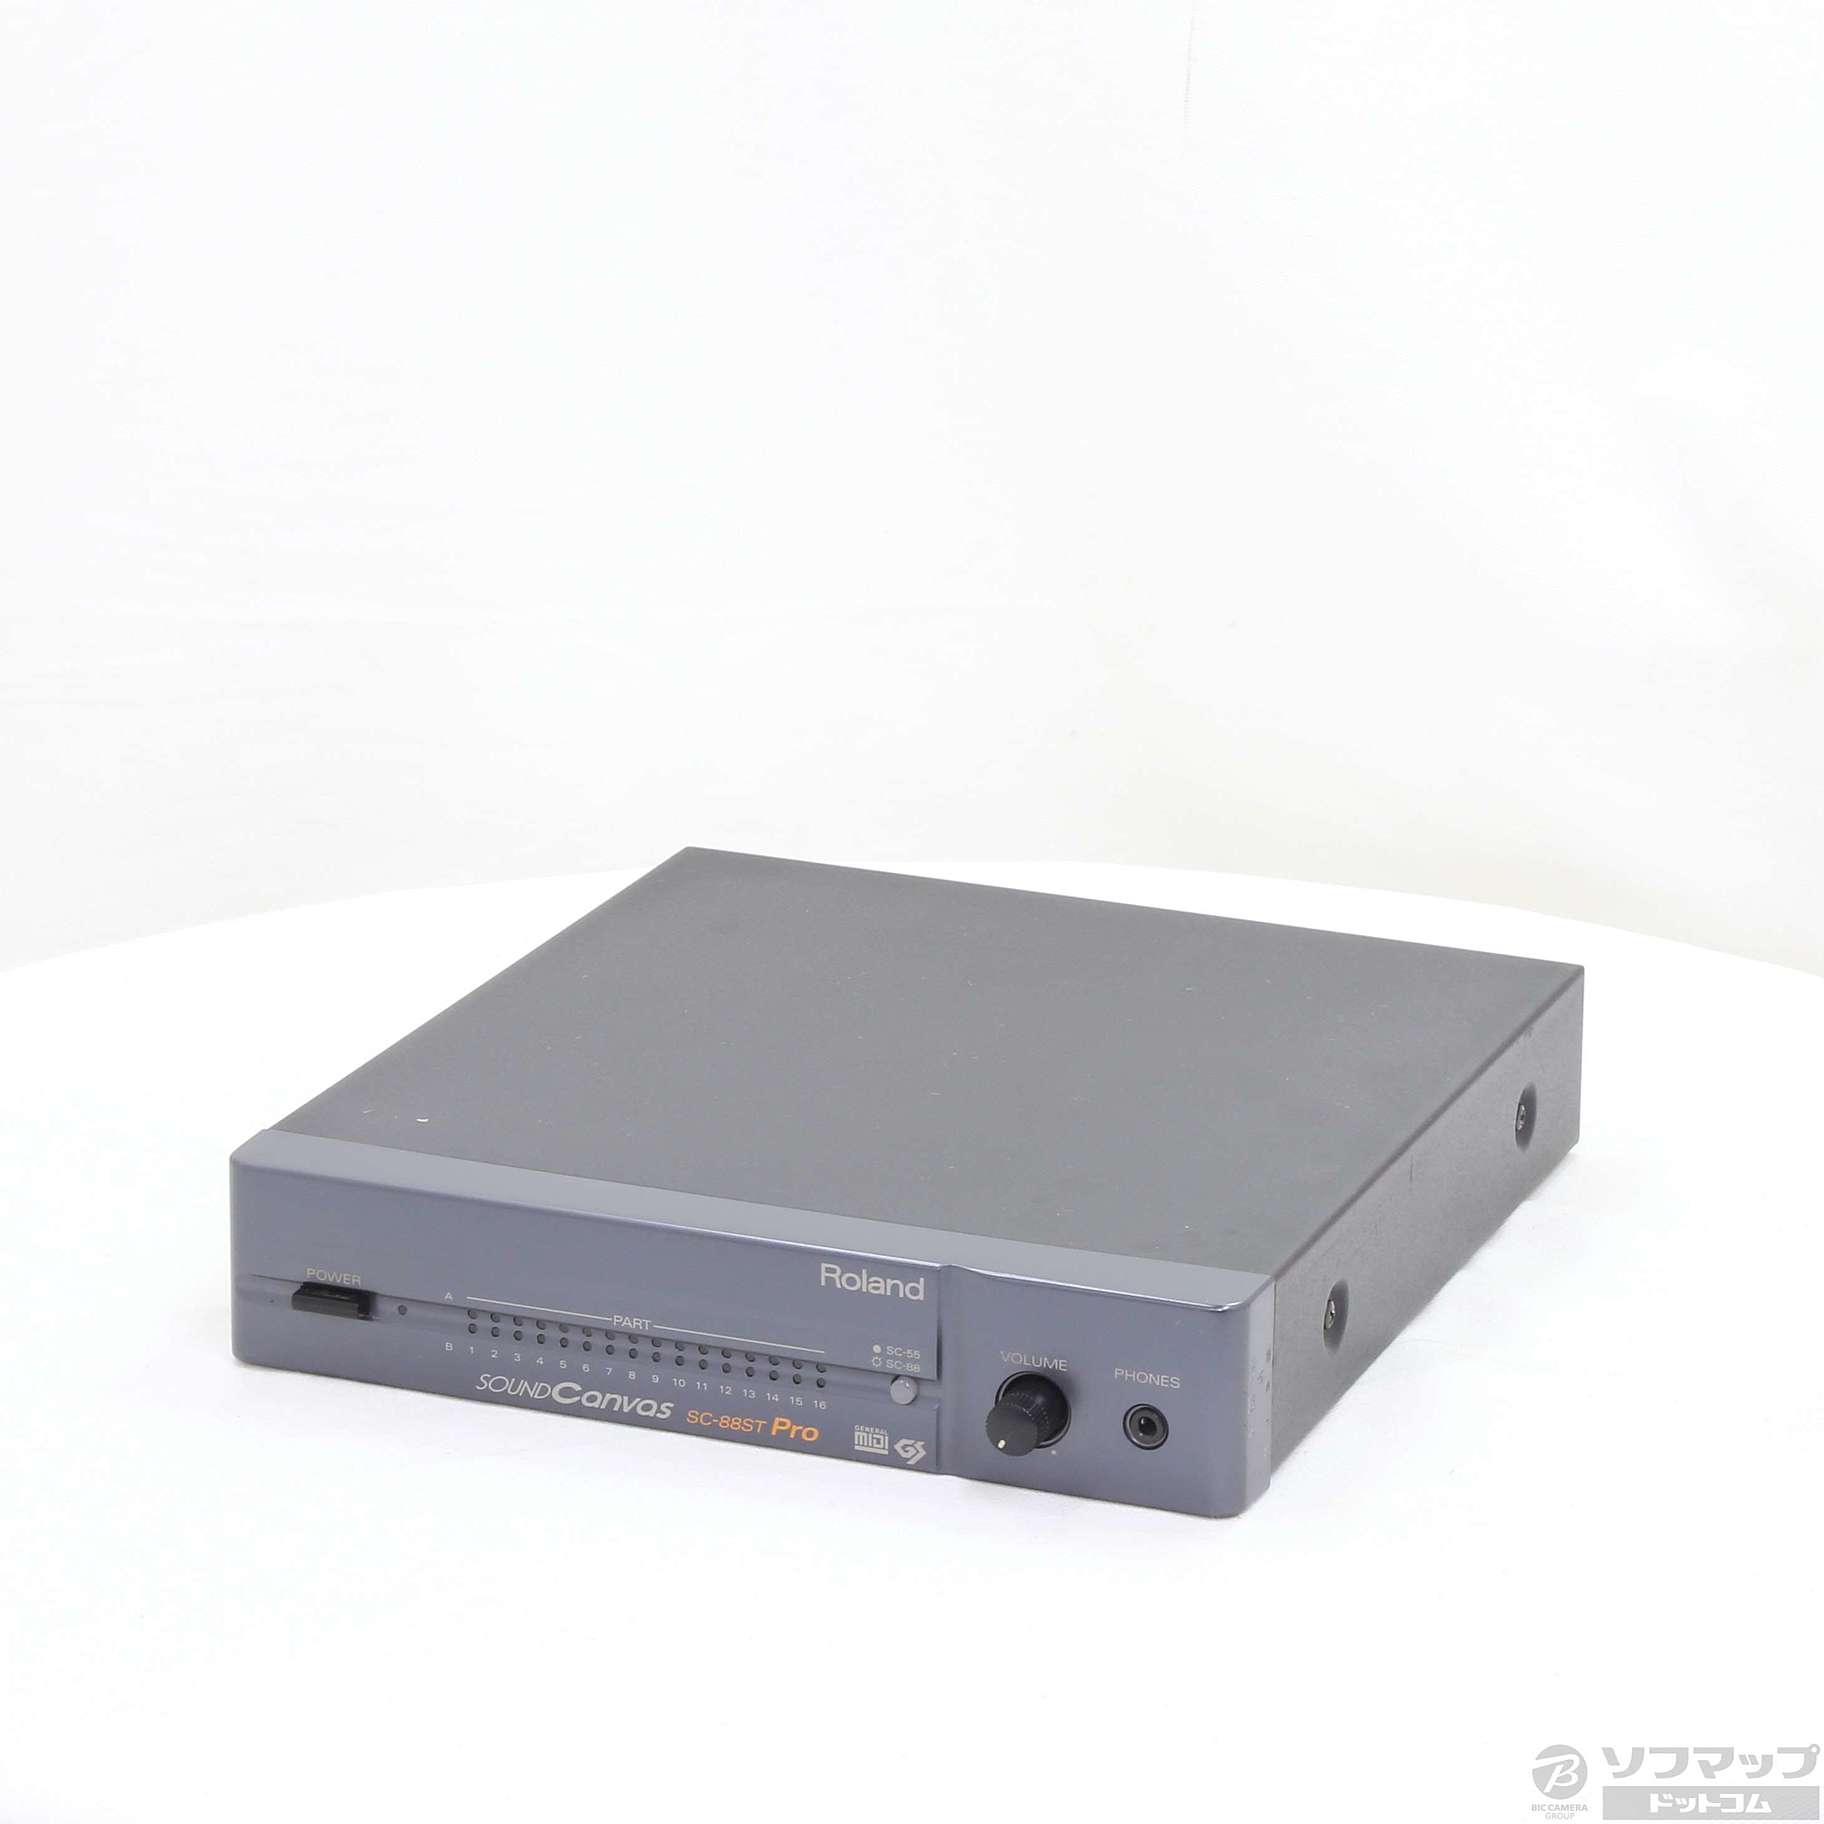 Roland SC-88 ST Pro MIDI音源 - DTM/DAW